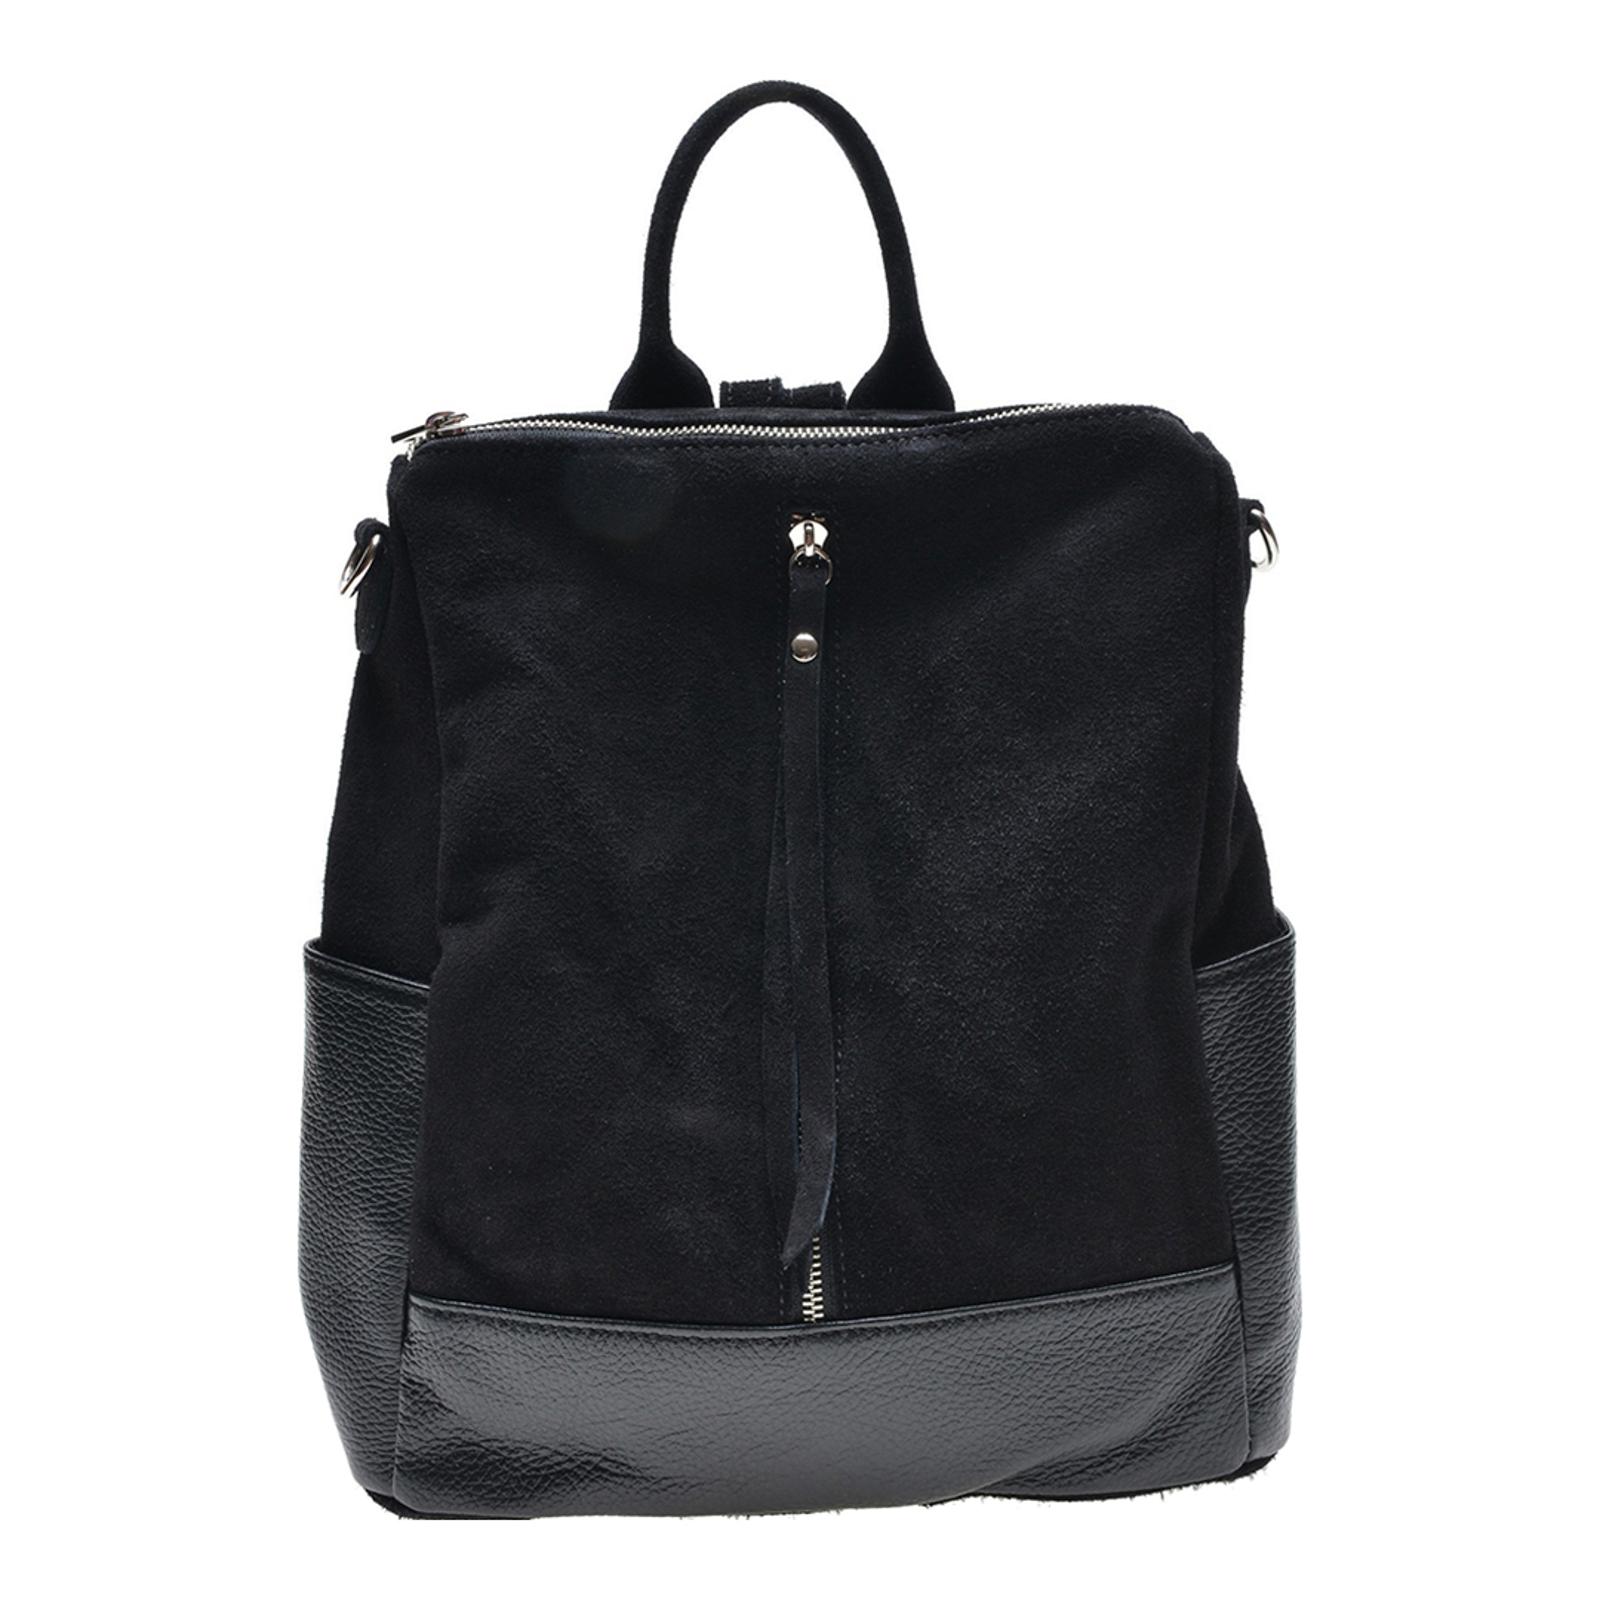 Black Leather Top Handle Backpack - BrandAlley